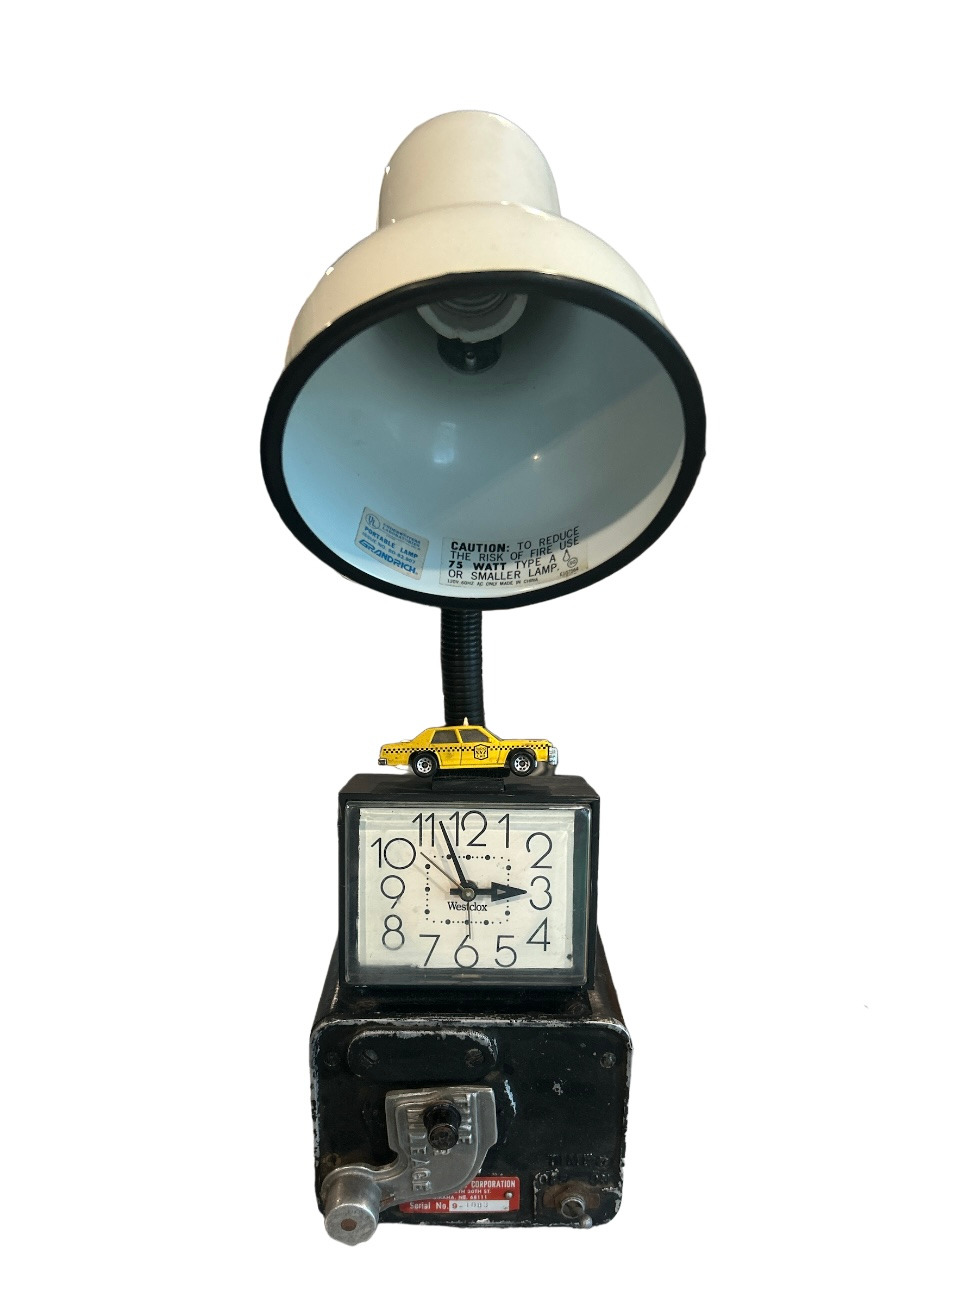 ORIGINAL OMAHA VINTAGE TAXI METER LAMP/ALARM CLOCK